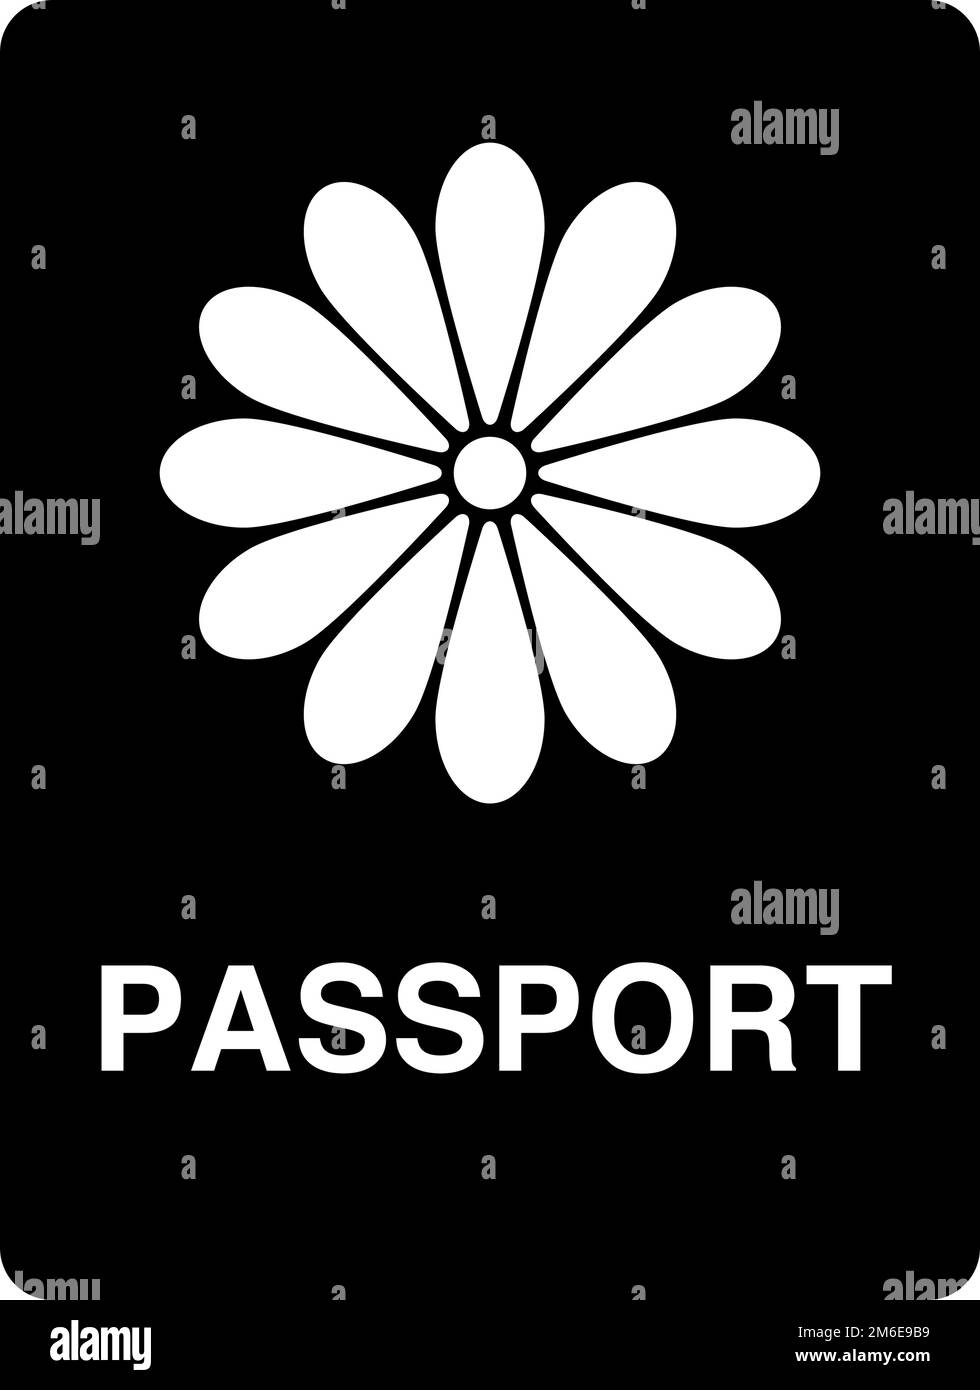 Japanese passport silhouette icon. Editable vector. Stock Vector